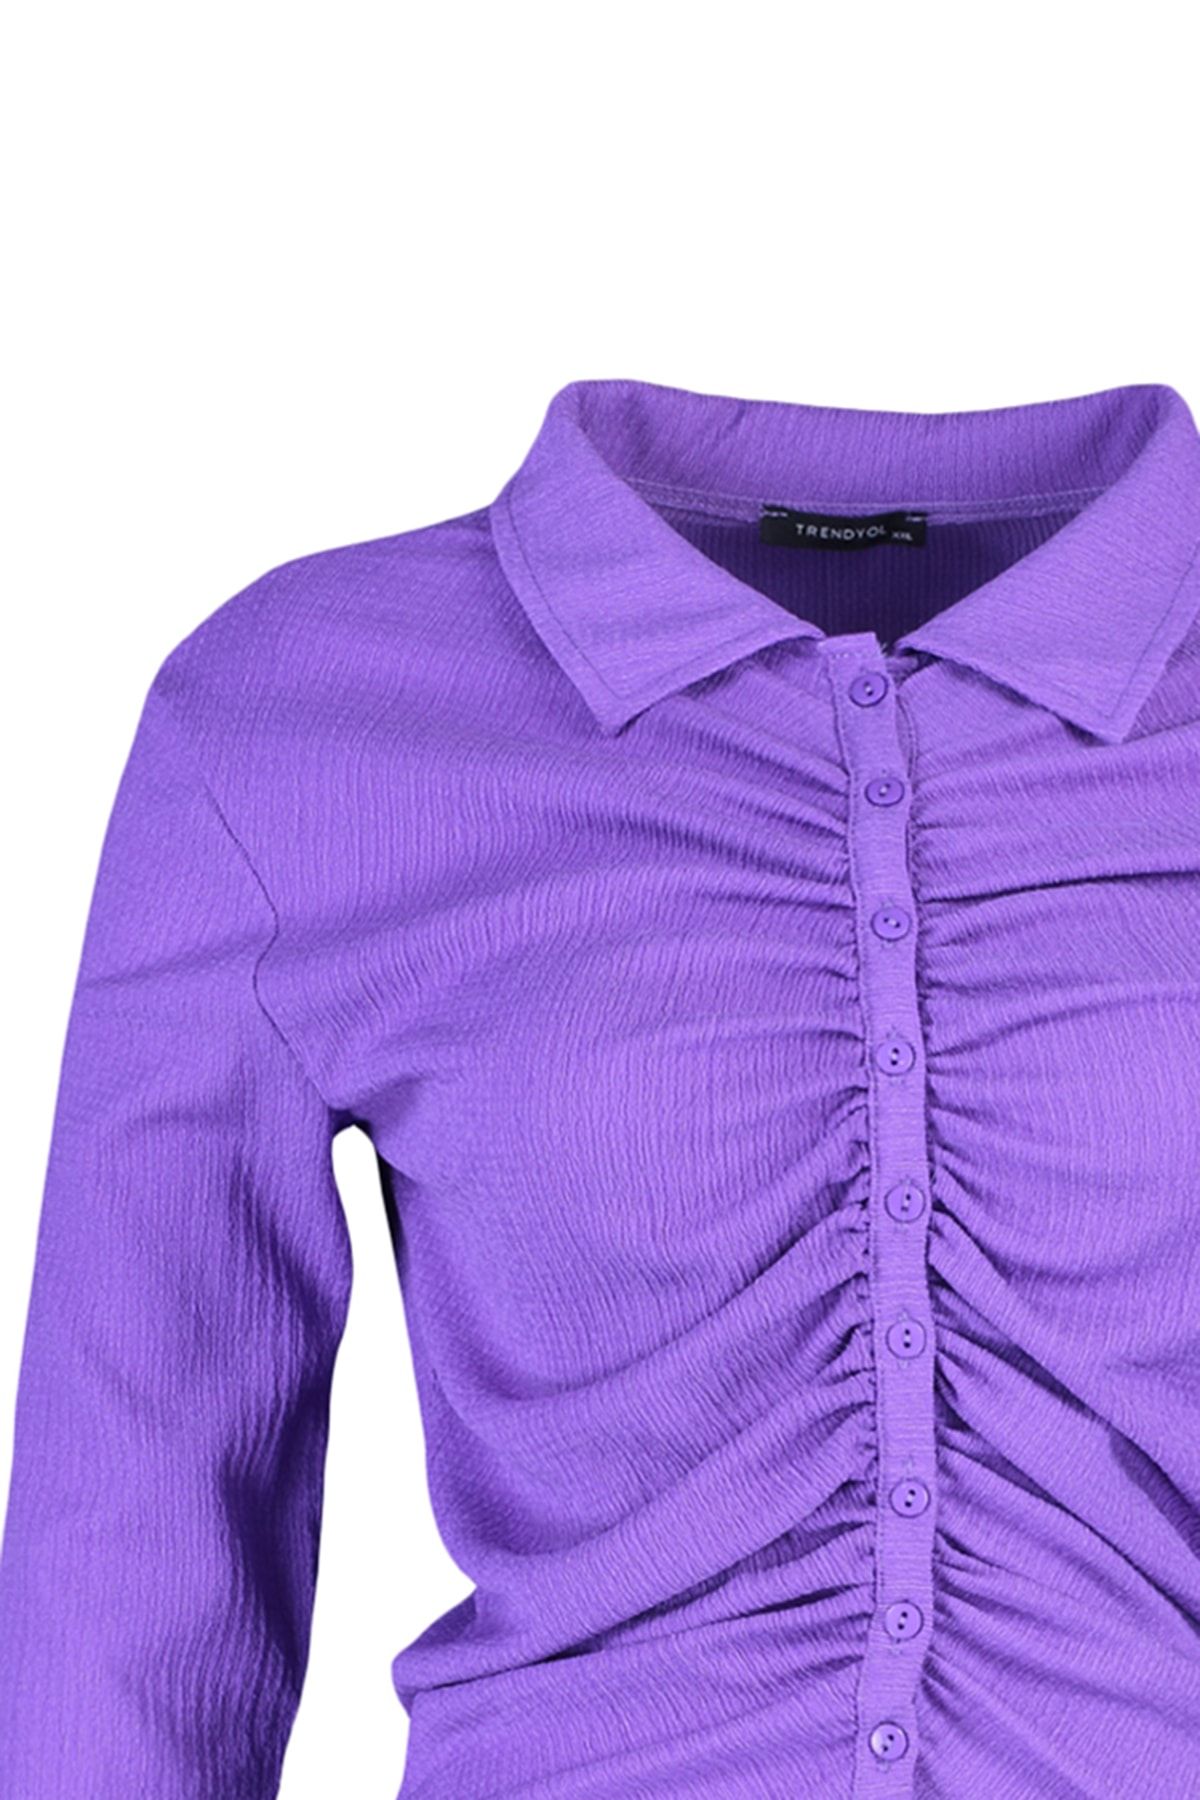 Trendyol Curve Plus Size Blouse - Purple - Regular fit - Trendyol